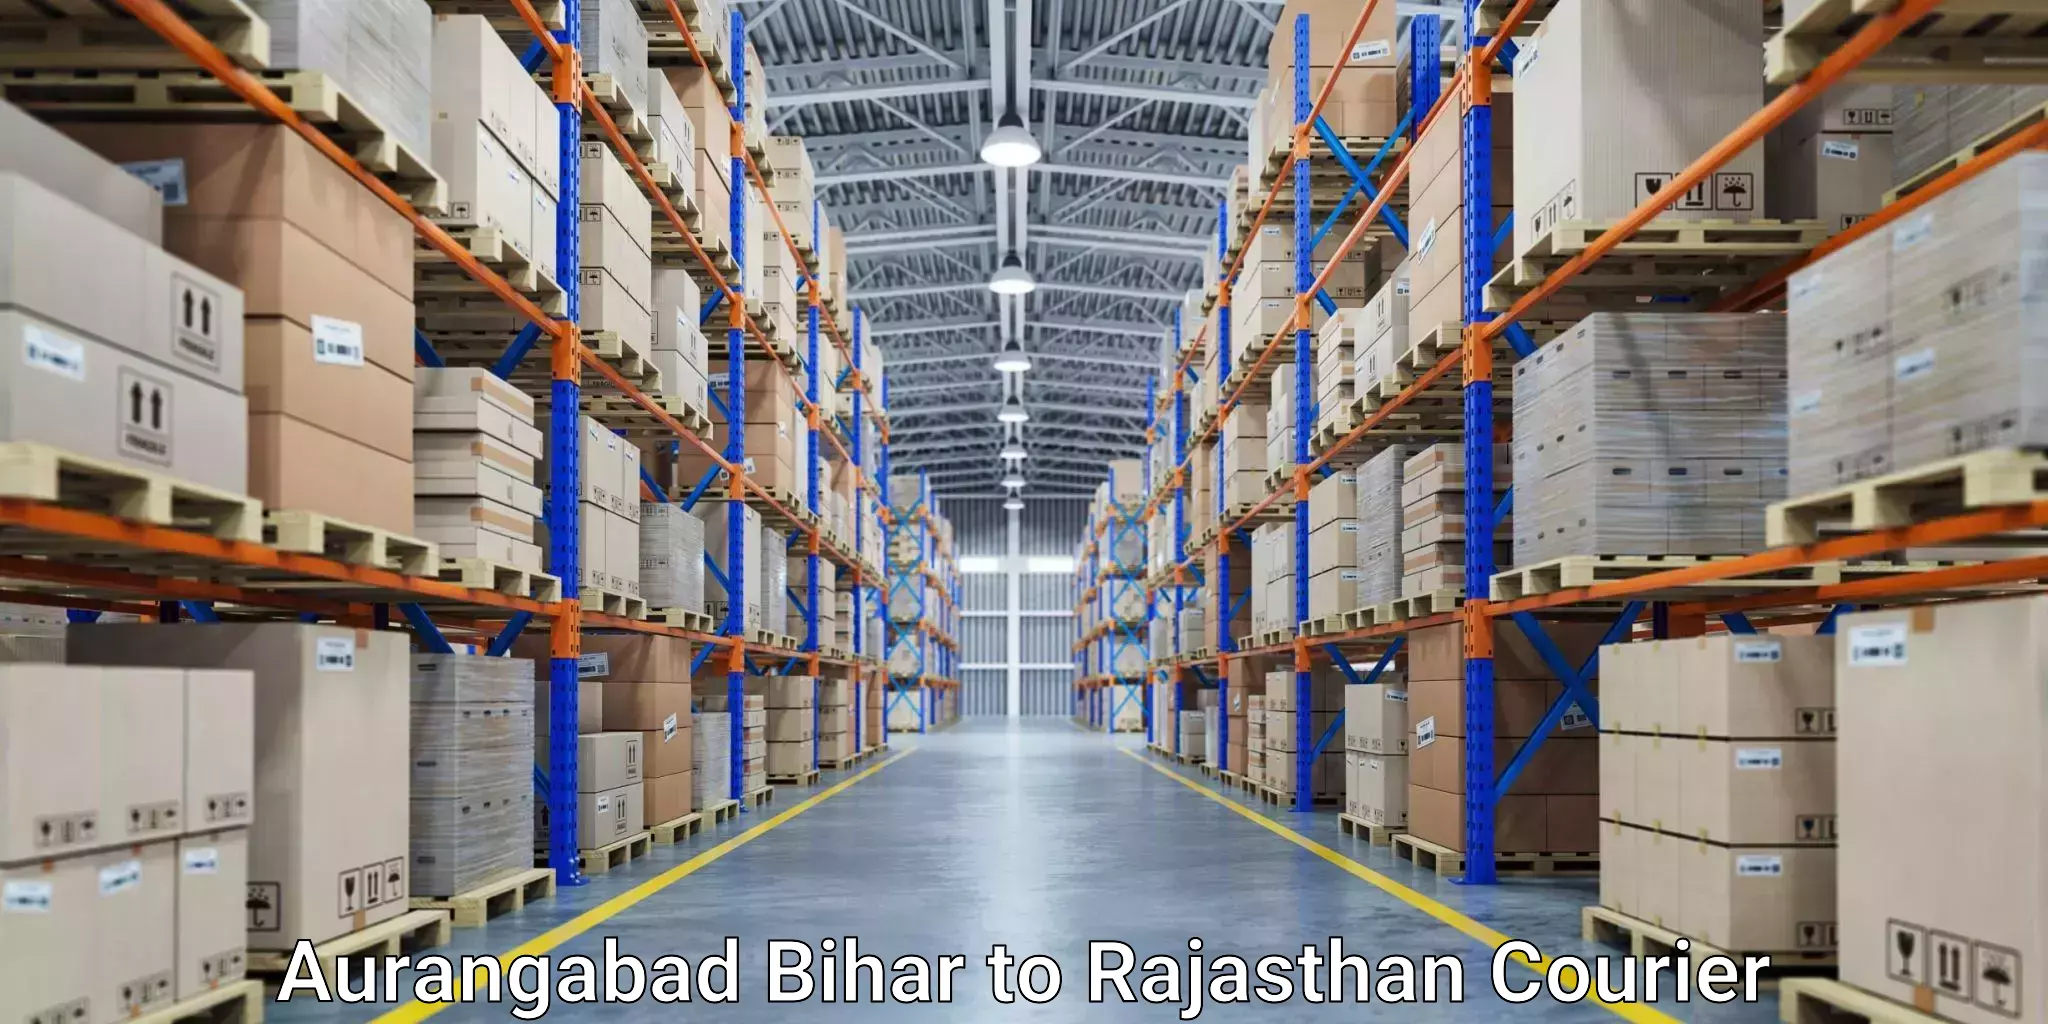 Express mail solutions Aurangabad Bihar to Raisingh Nagar